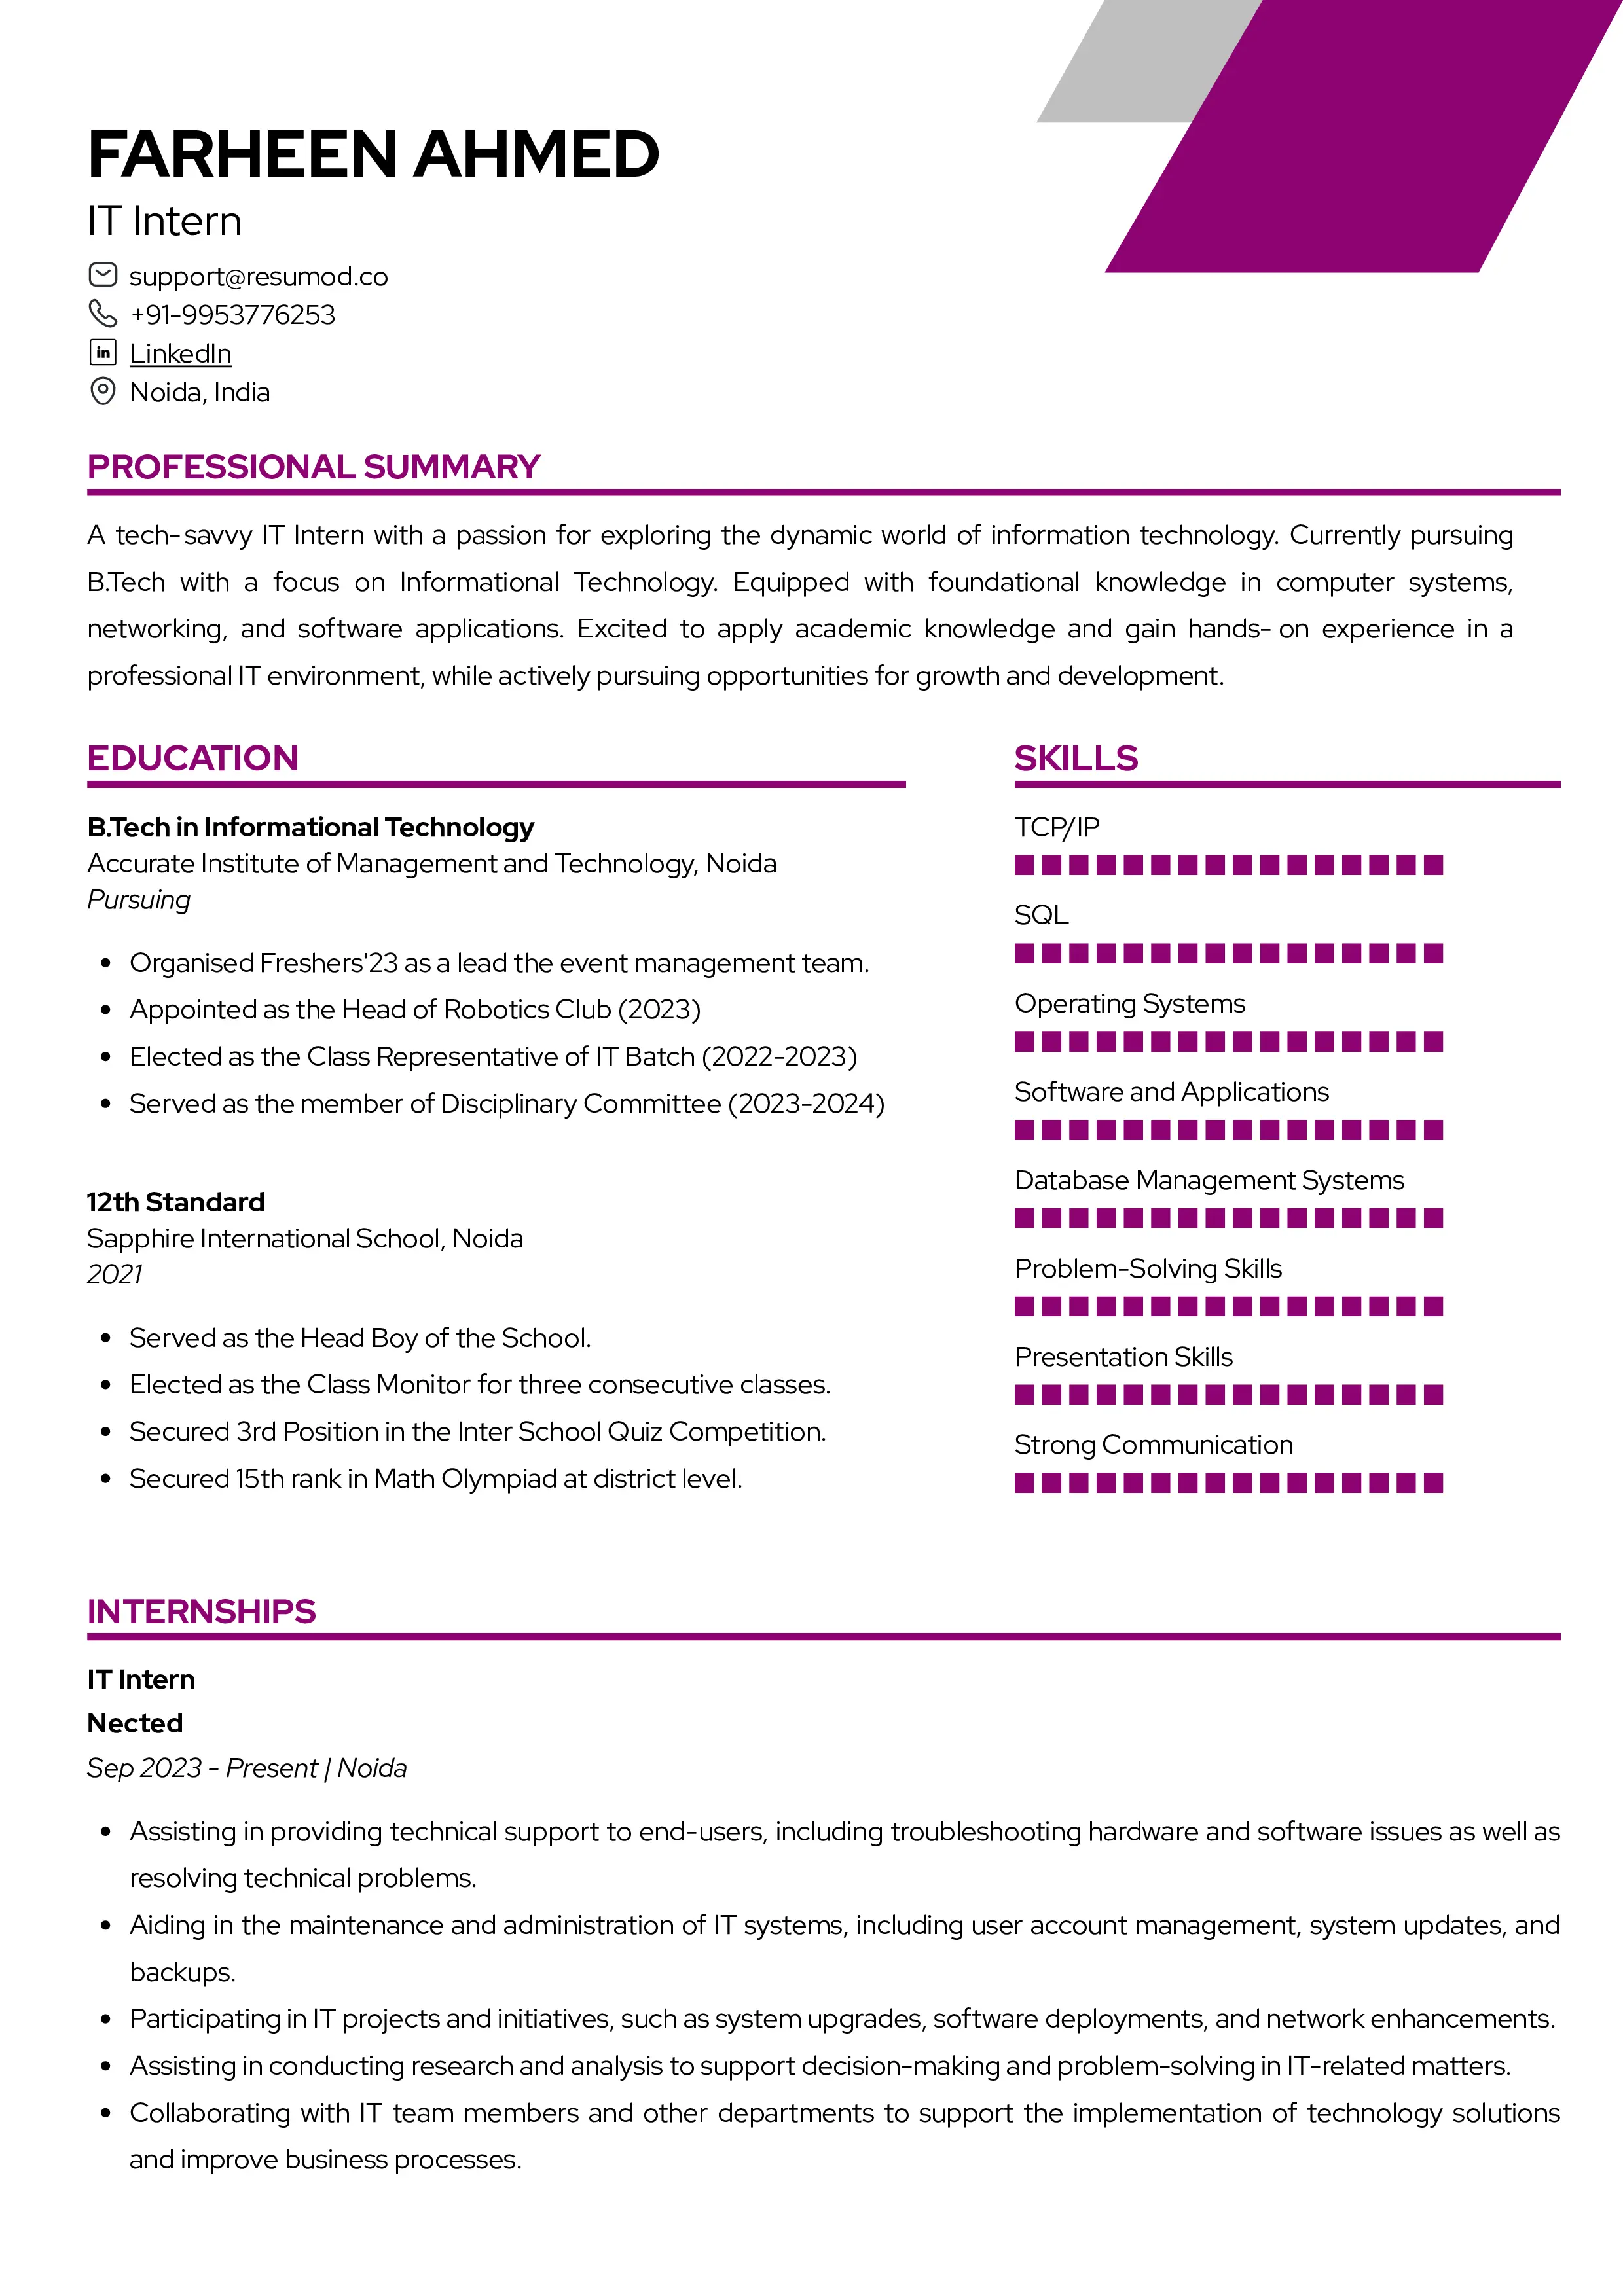 Sample Resume of IT Intern | Free Resume Templates & Samples on Resumod.co